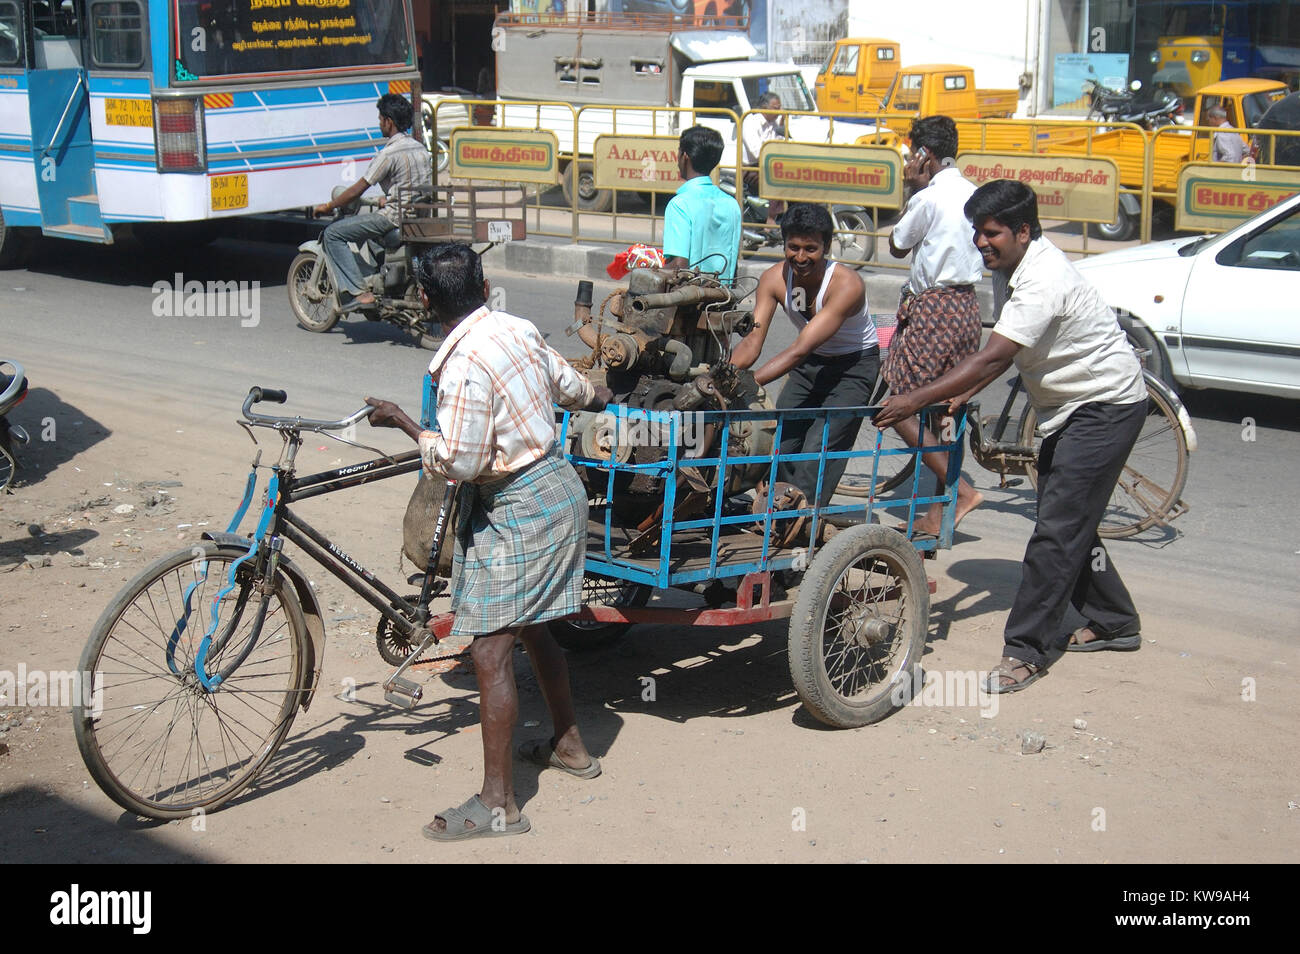 TAMIL NADU, INDIA, circa 2009: Men move a large motor on a flimsy bicycle trailer, circa 2009 in Tirunelveli, Tamil Nadu, India. India's economy relie Stock Photo